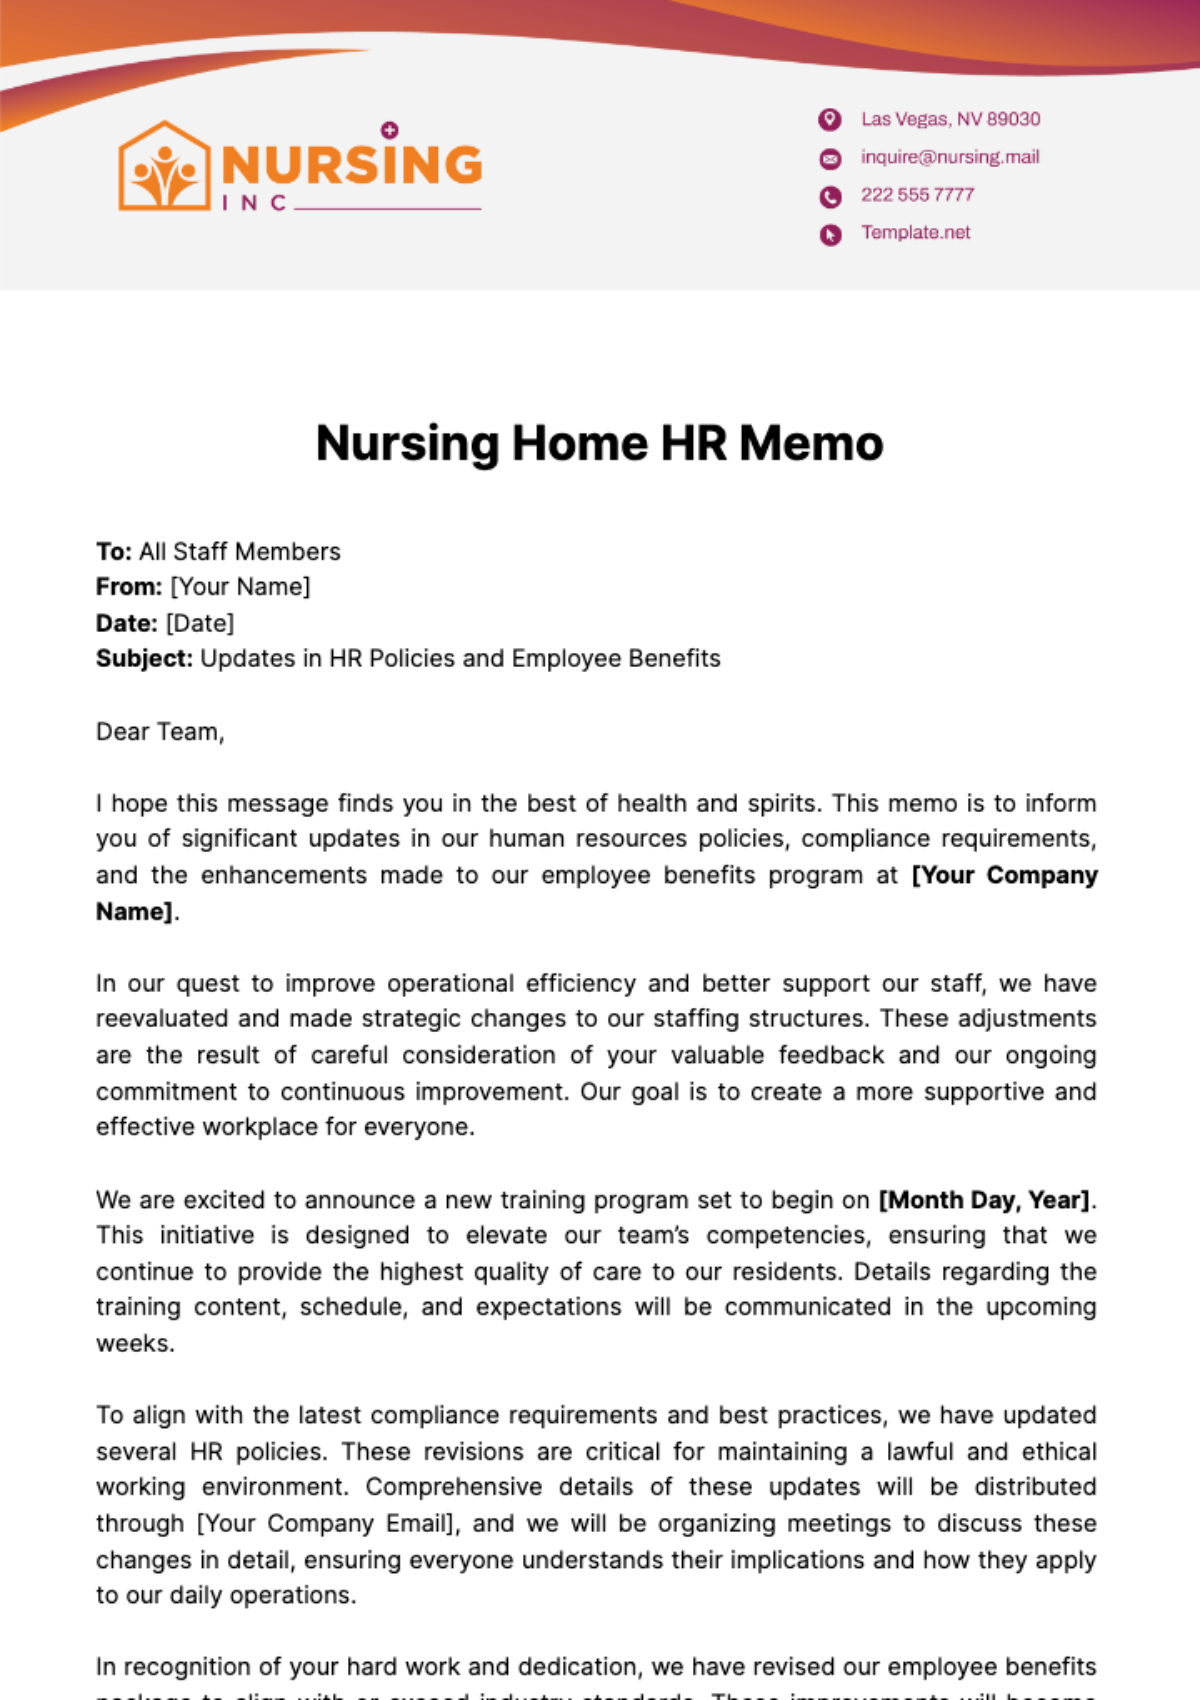 Nursing Home HR Memo Template